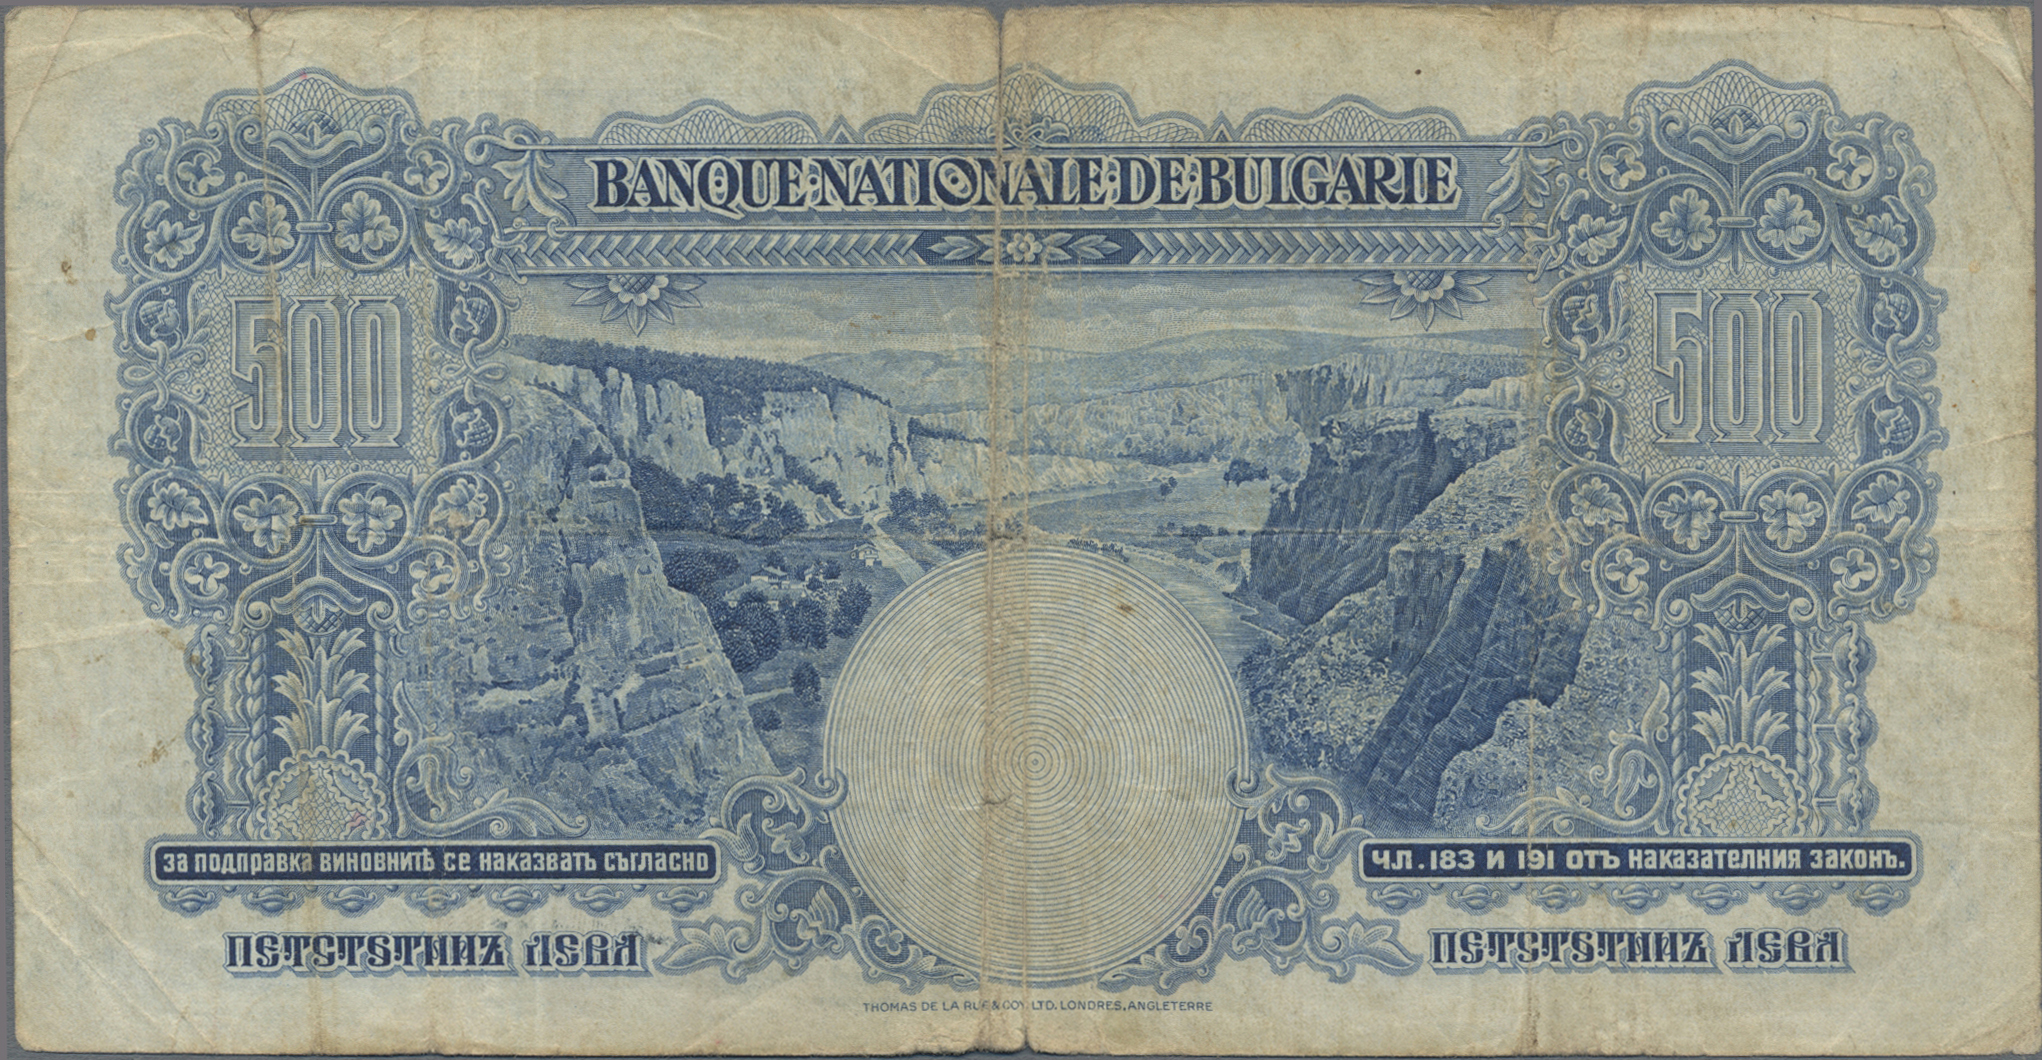 Lot 00130 - Bulgaria / Bulgarien | Banknoten  -  Auktionshaus Christoph Gärtner GmbH & Co. KG 55th AUCTION - Day 1